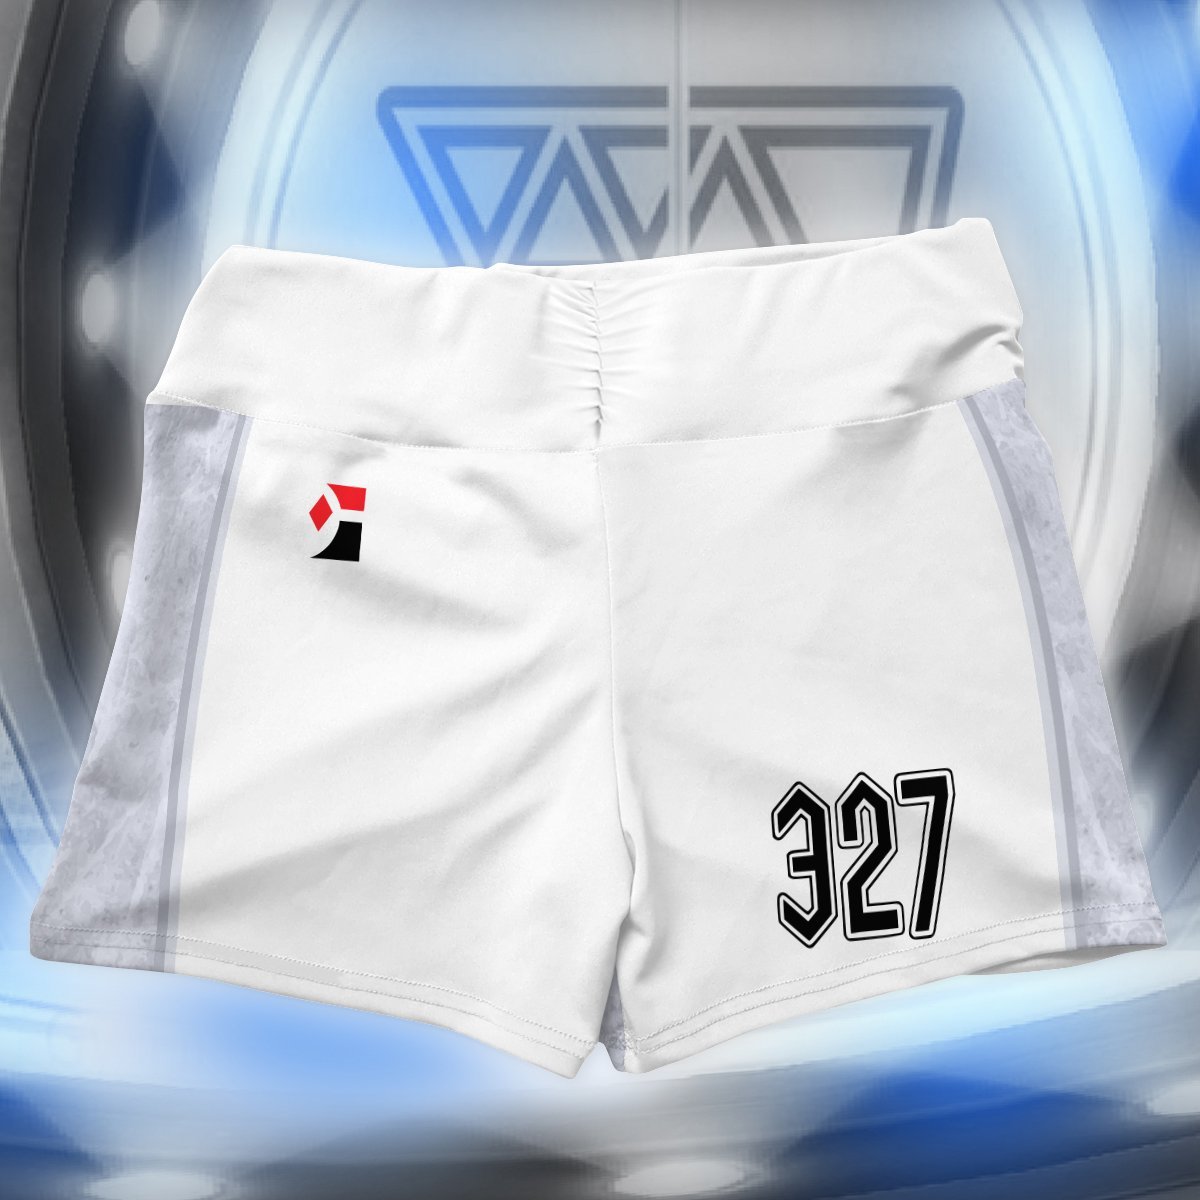 pokemon ice uniform active wear set 609286 - Anime Swimsuits